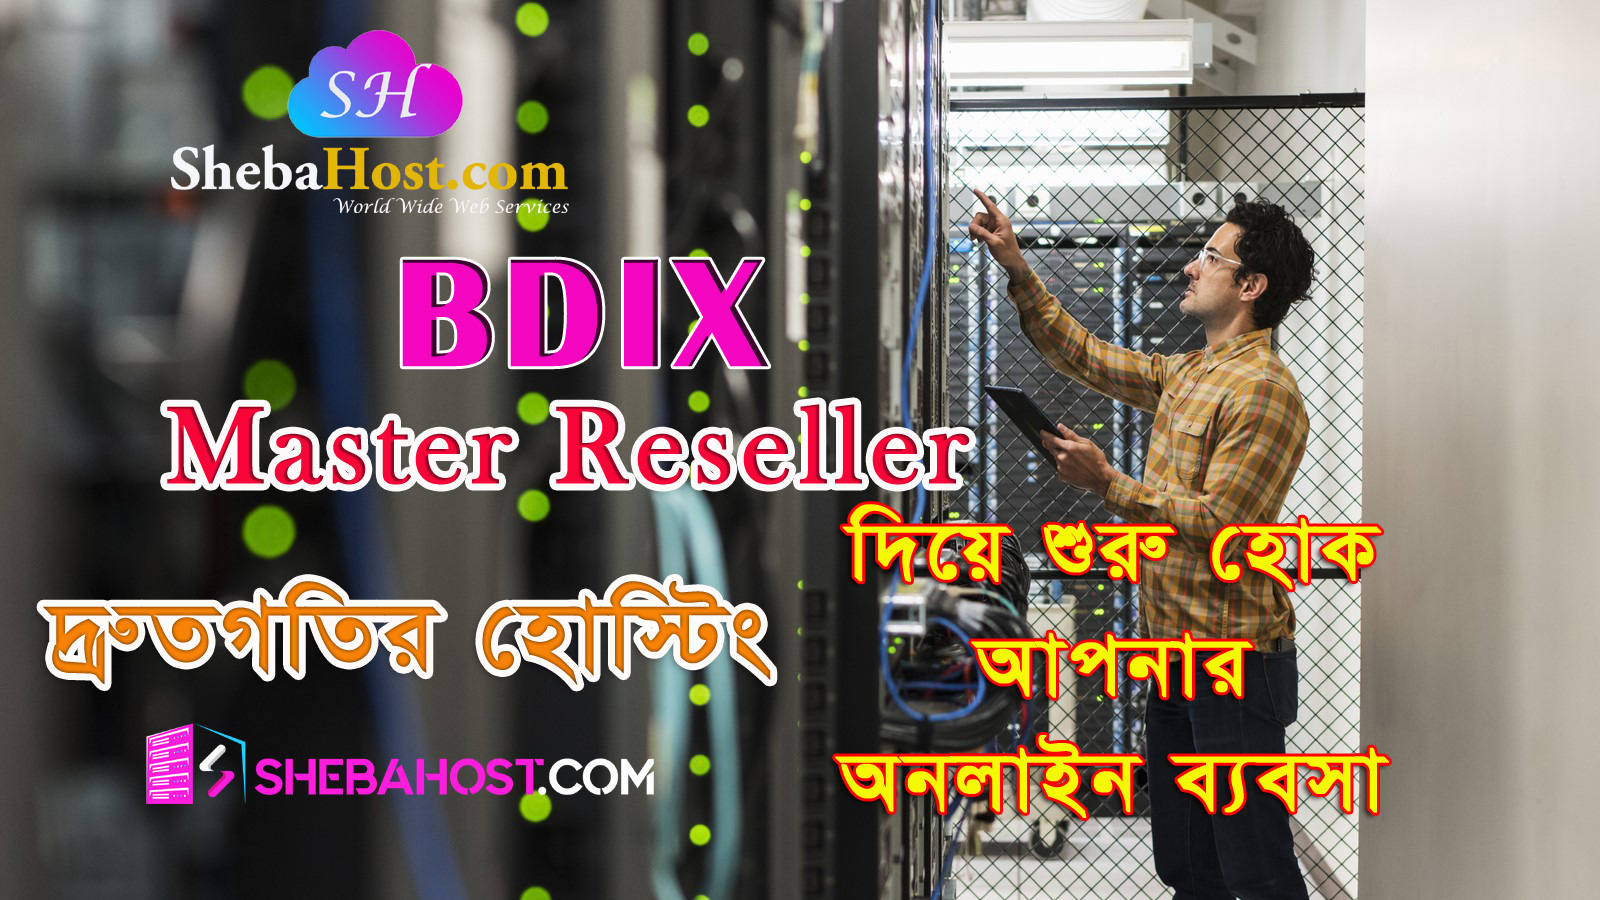 128313Website Traffic -1k from Bangladesh (Choose Referrer)